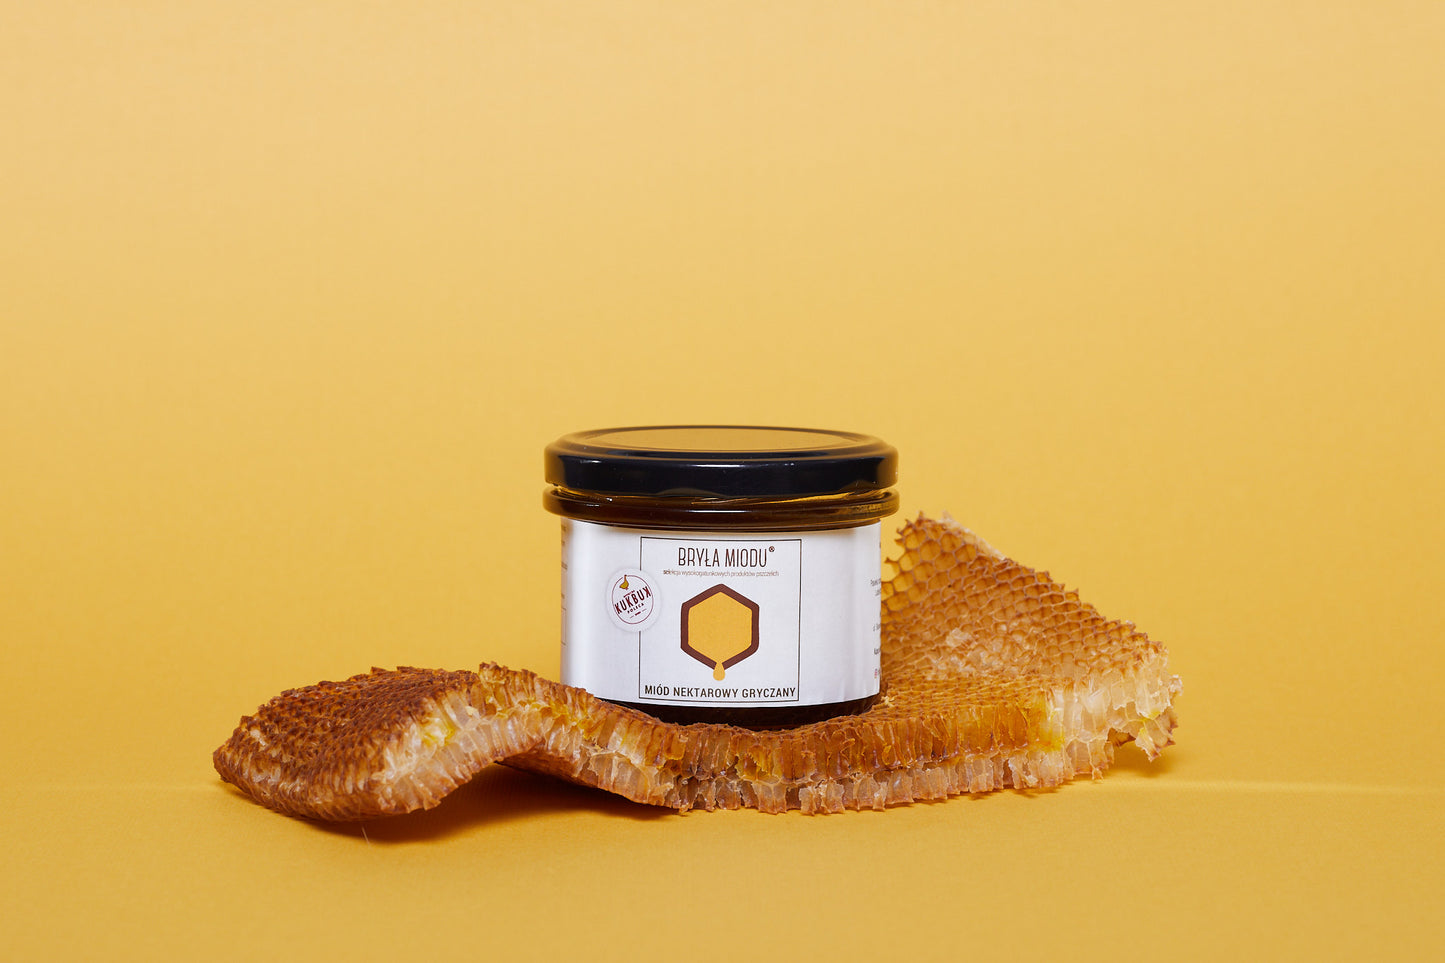 Buckwheat honey from the Lublin region